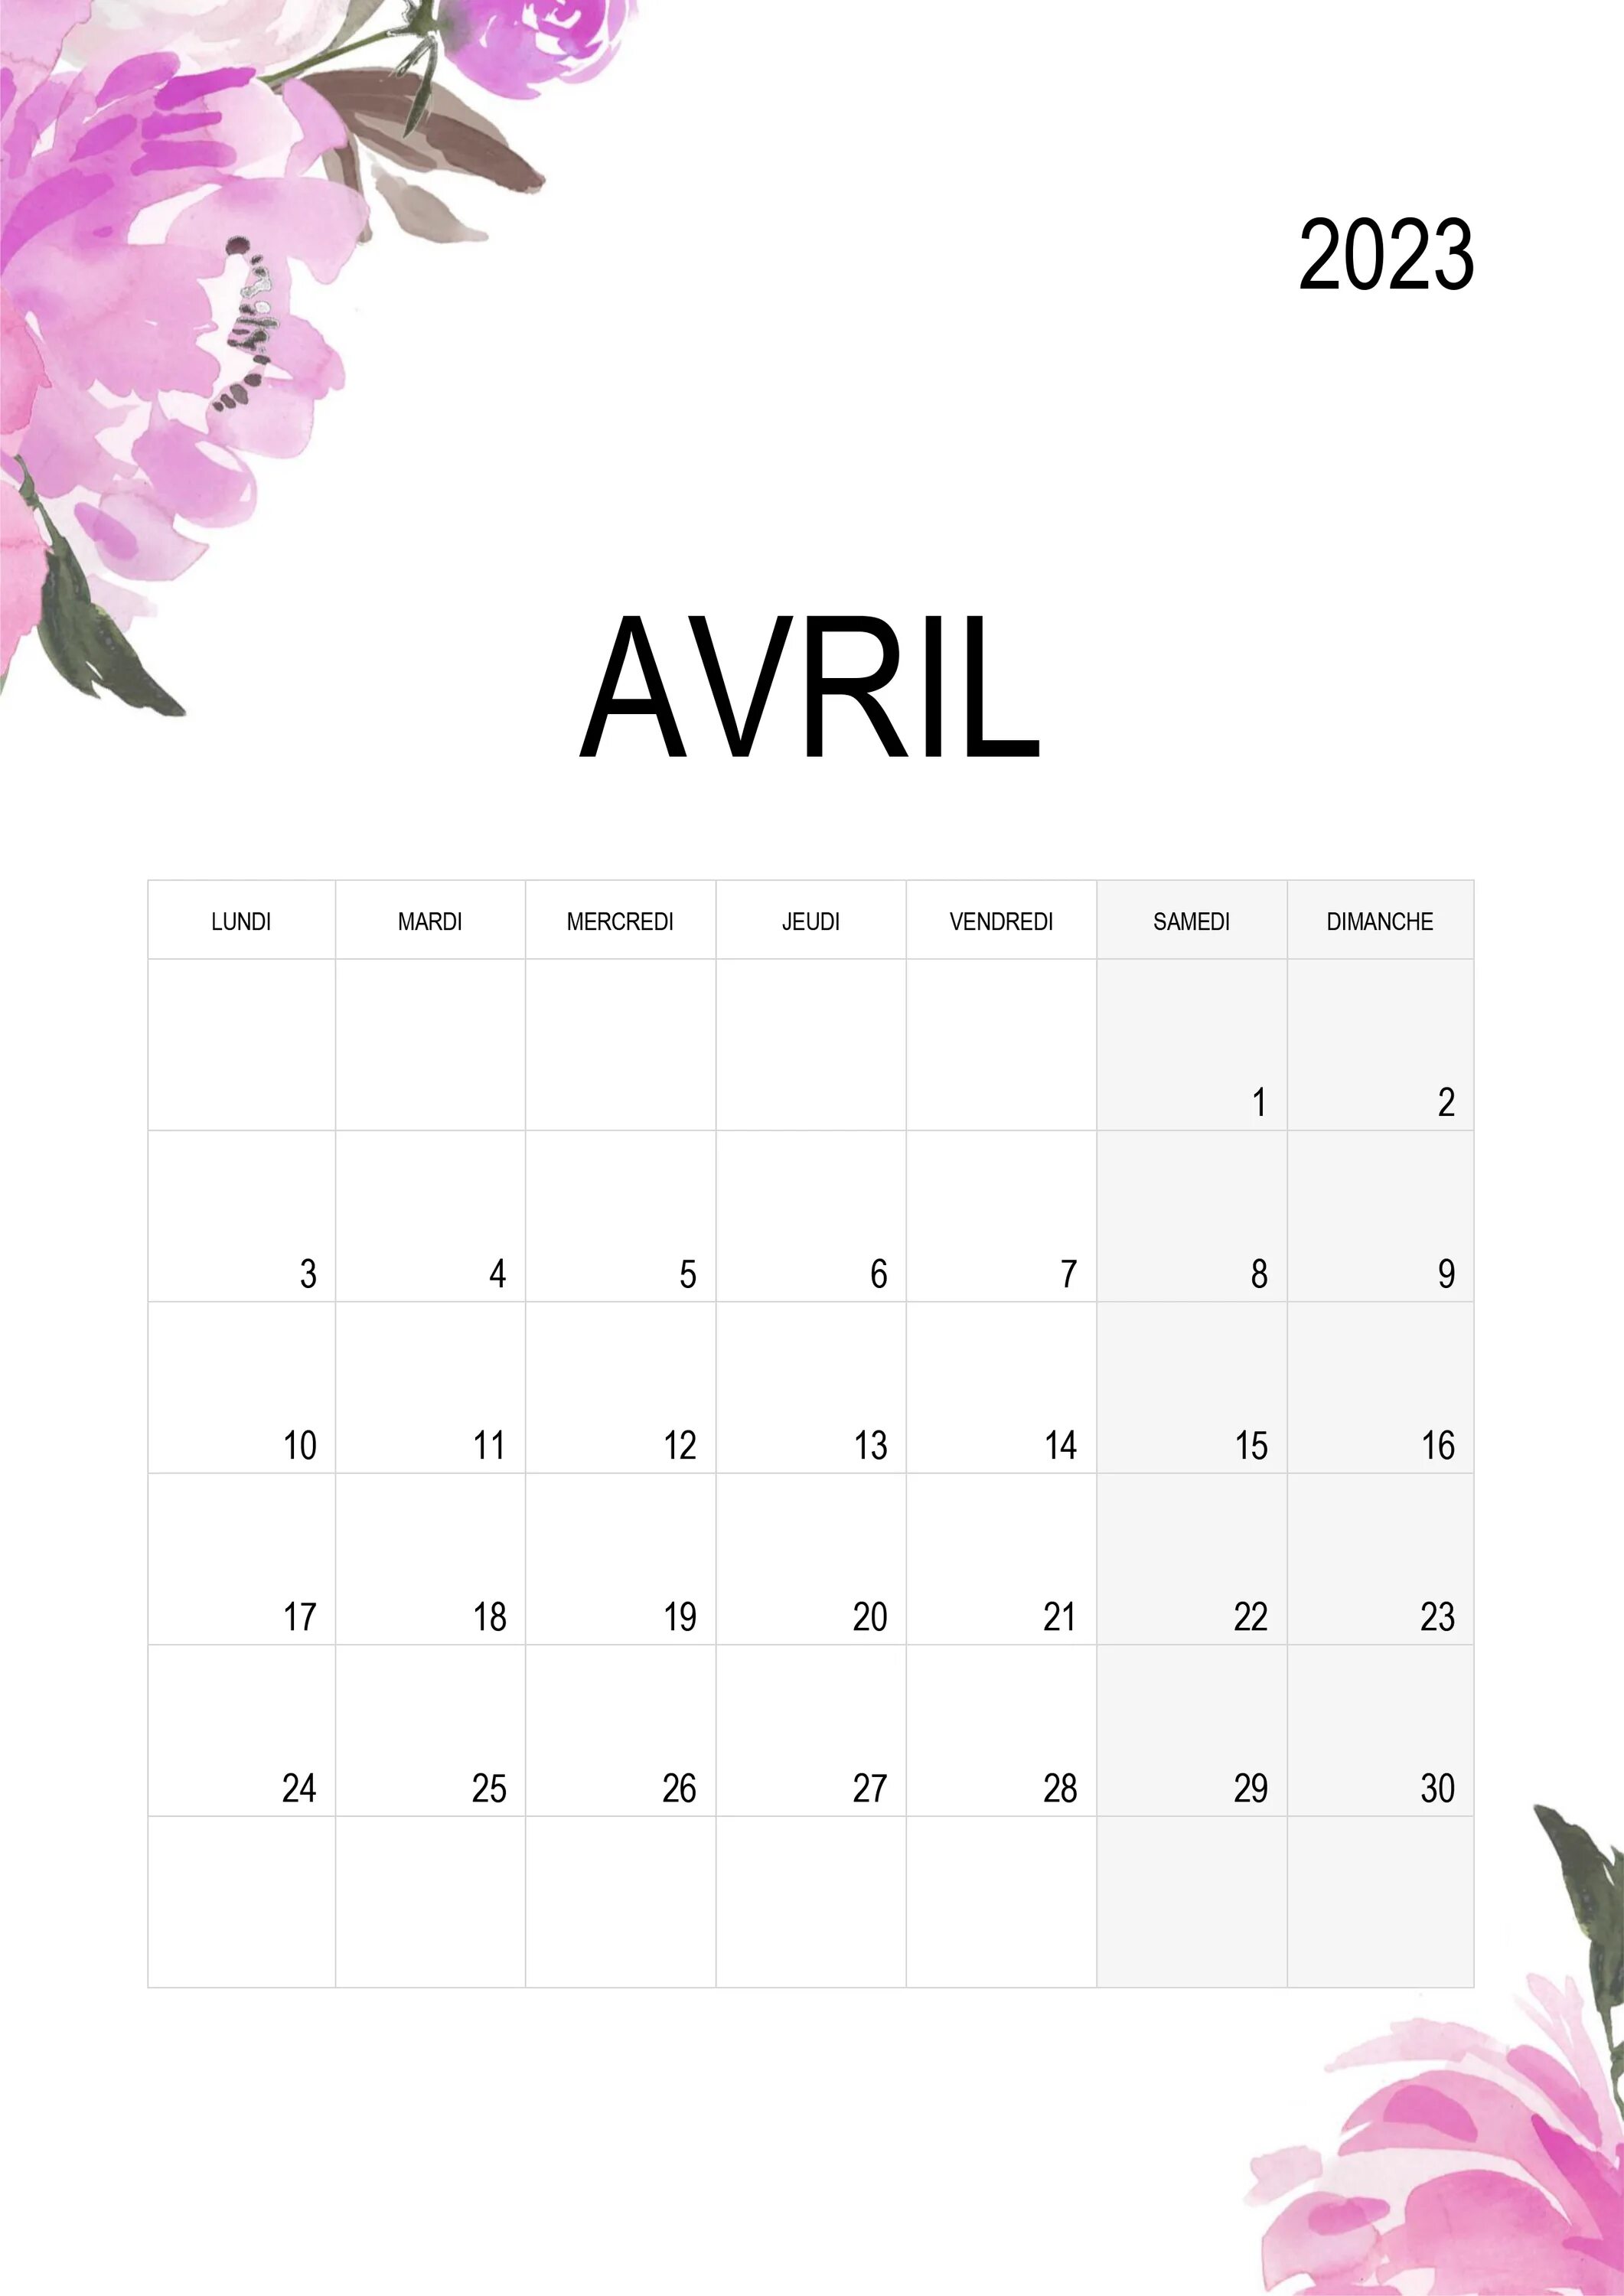 29 апреля 2024 день недели. Календарь апрель. Календарь апрель 2023. Календарь на 2023 апрель апрель. Календарь на 2023 календарь на апрель 2023.